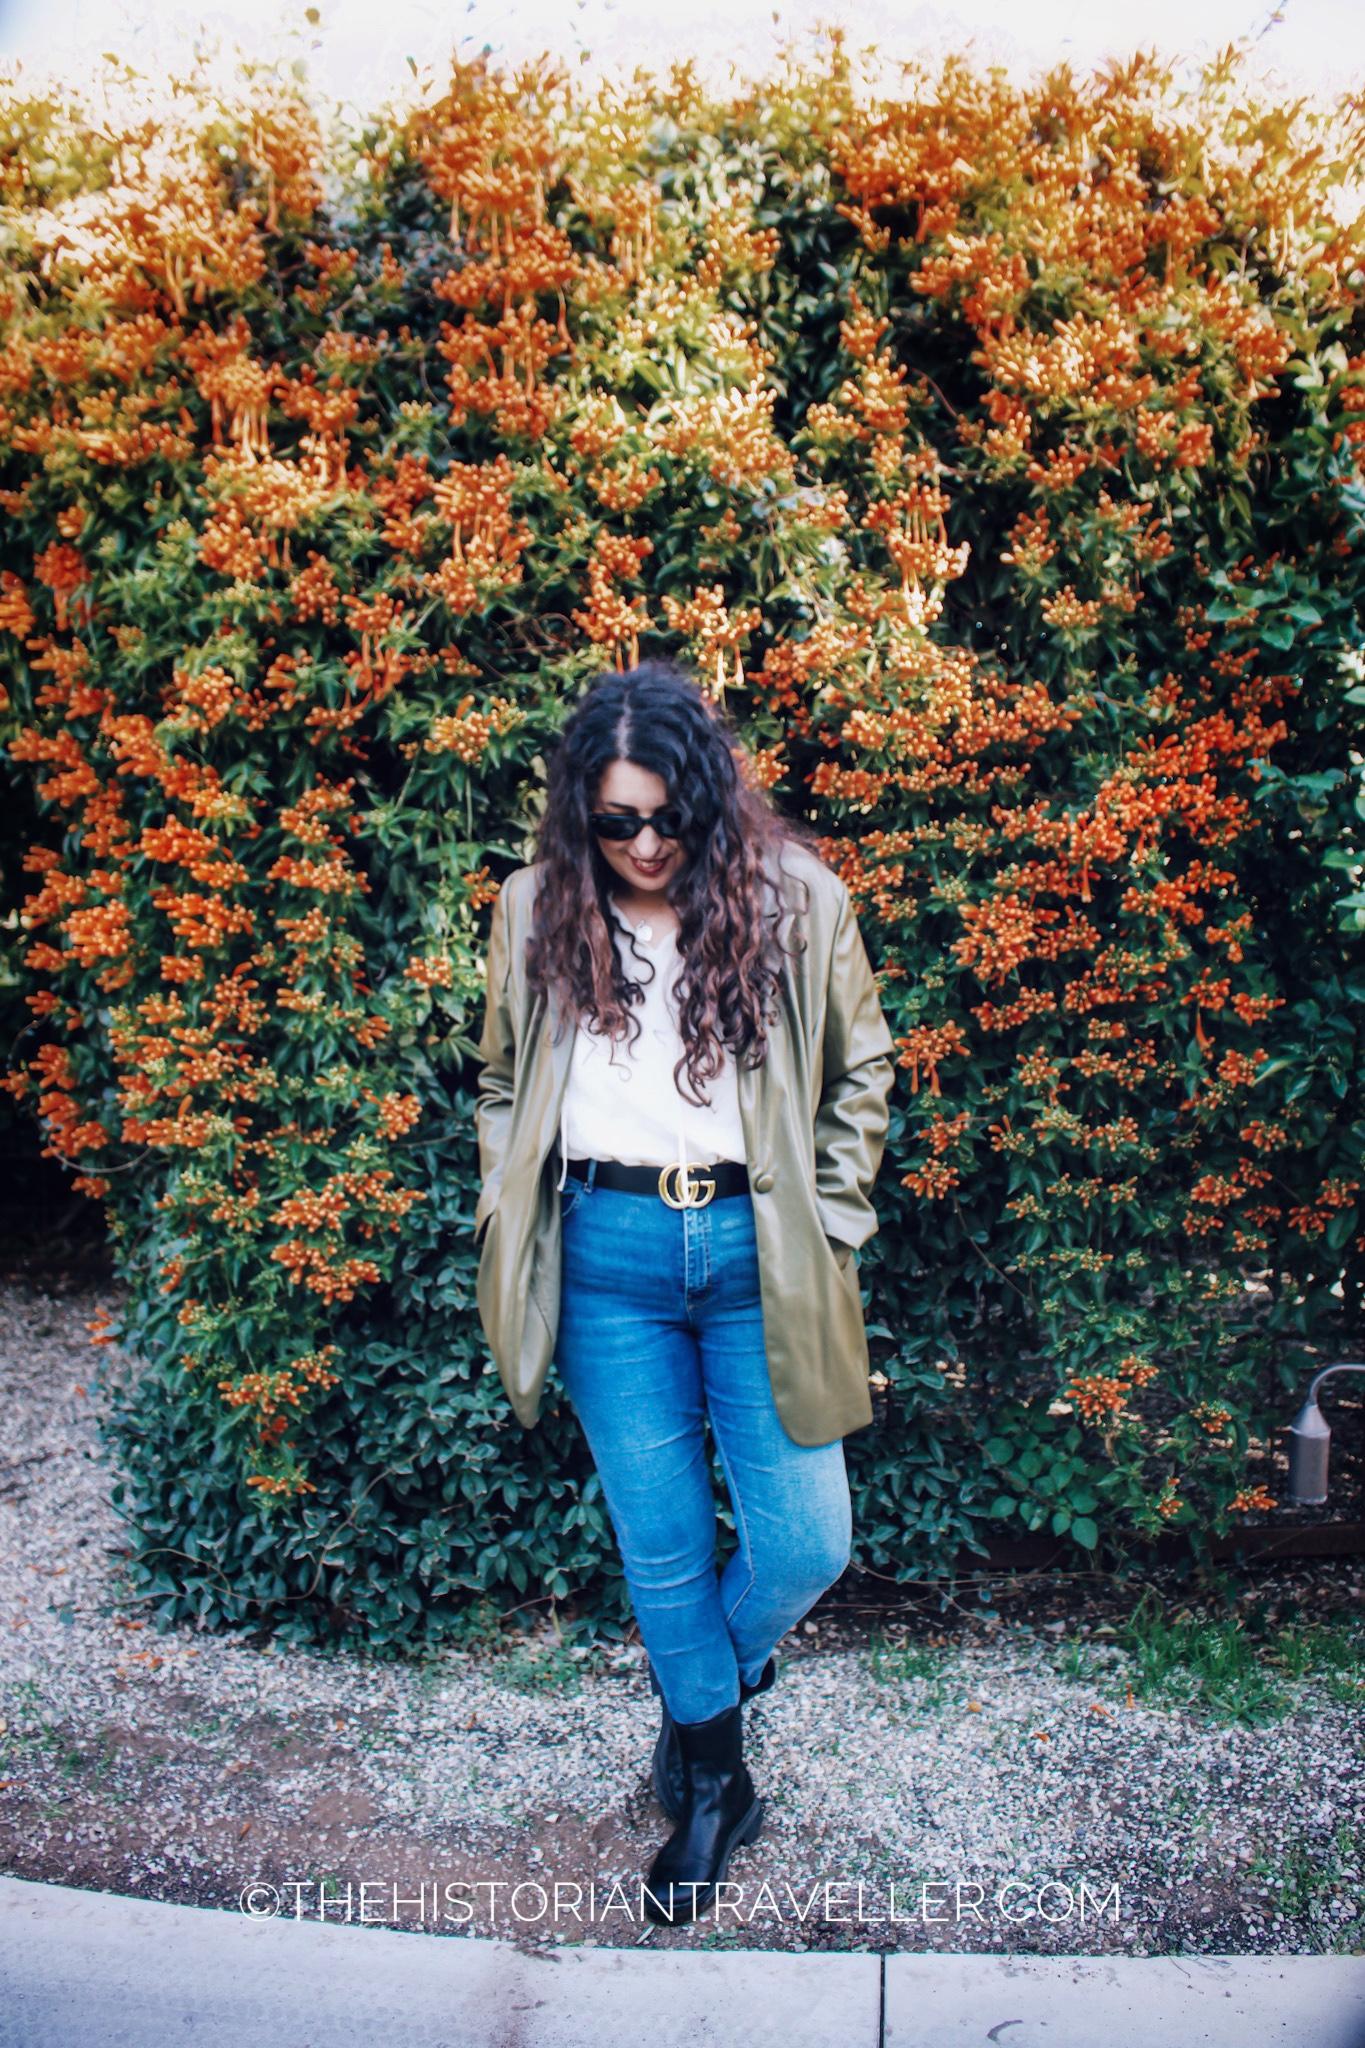 Laura posing on a bush. Gucci Belt and leather jacket -Donna Carmela Resort